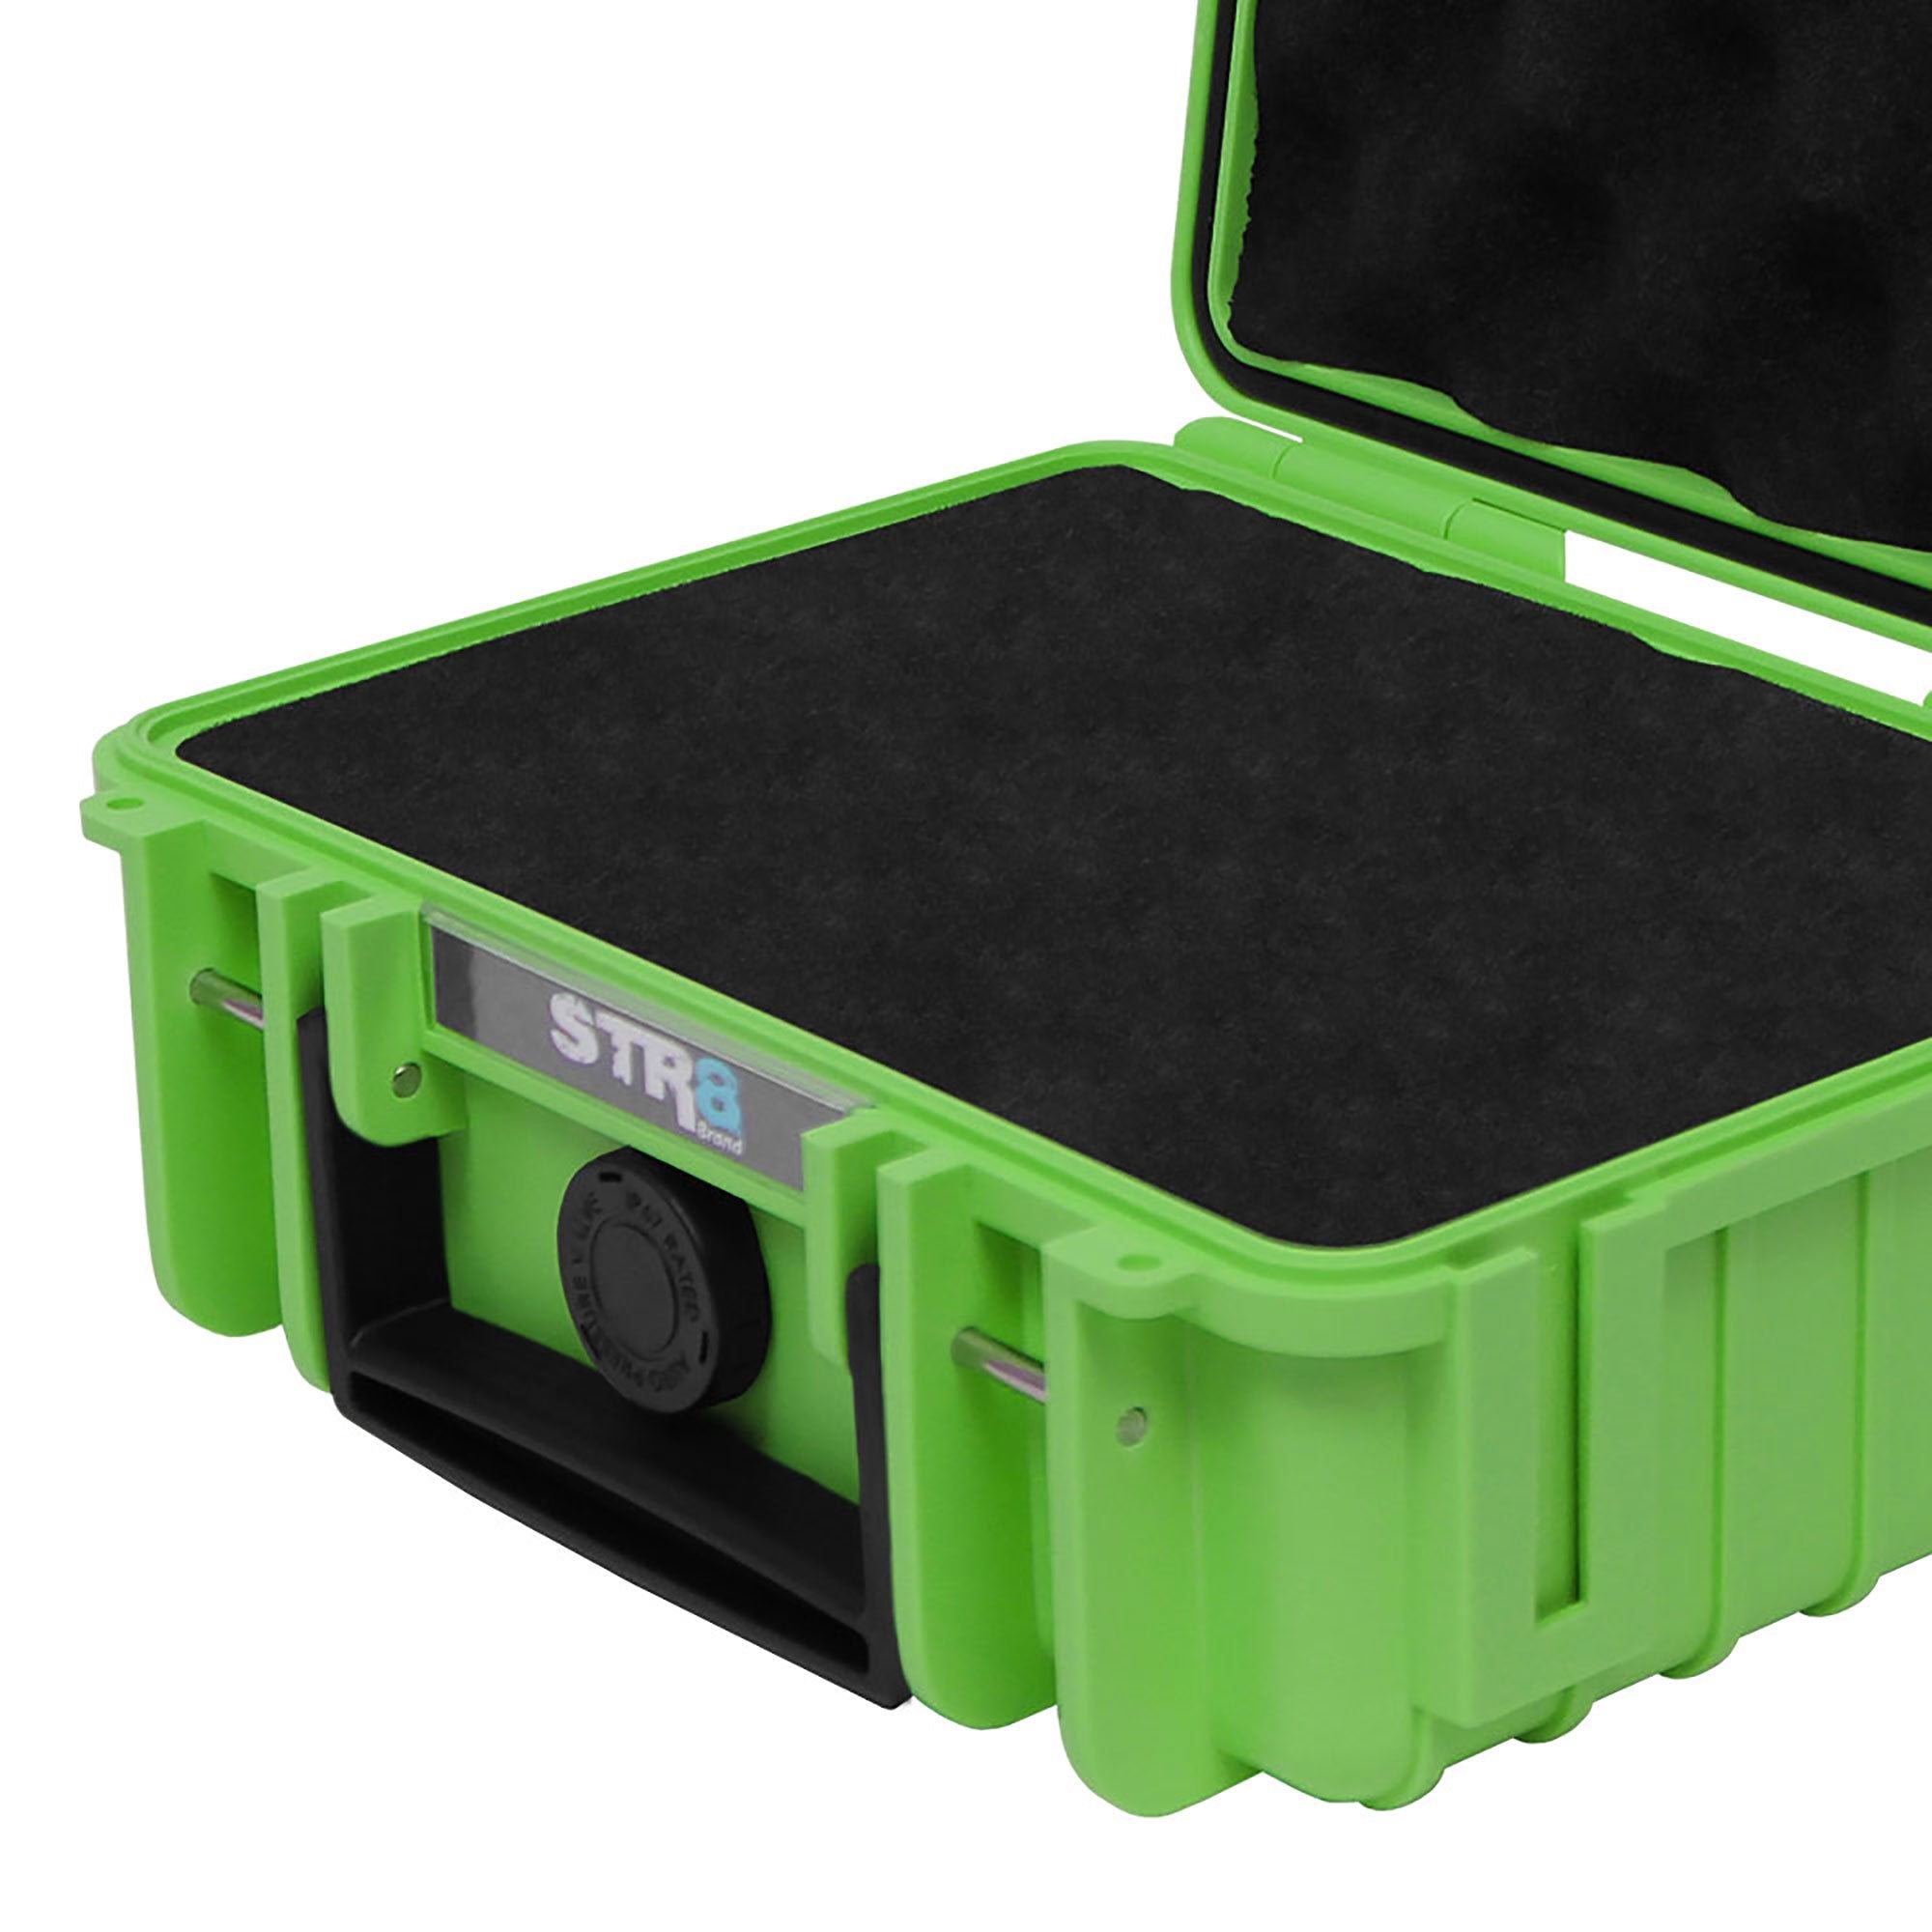 8" 2 Layer Nitro Green STR8 Case - 4